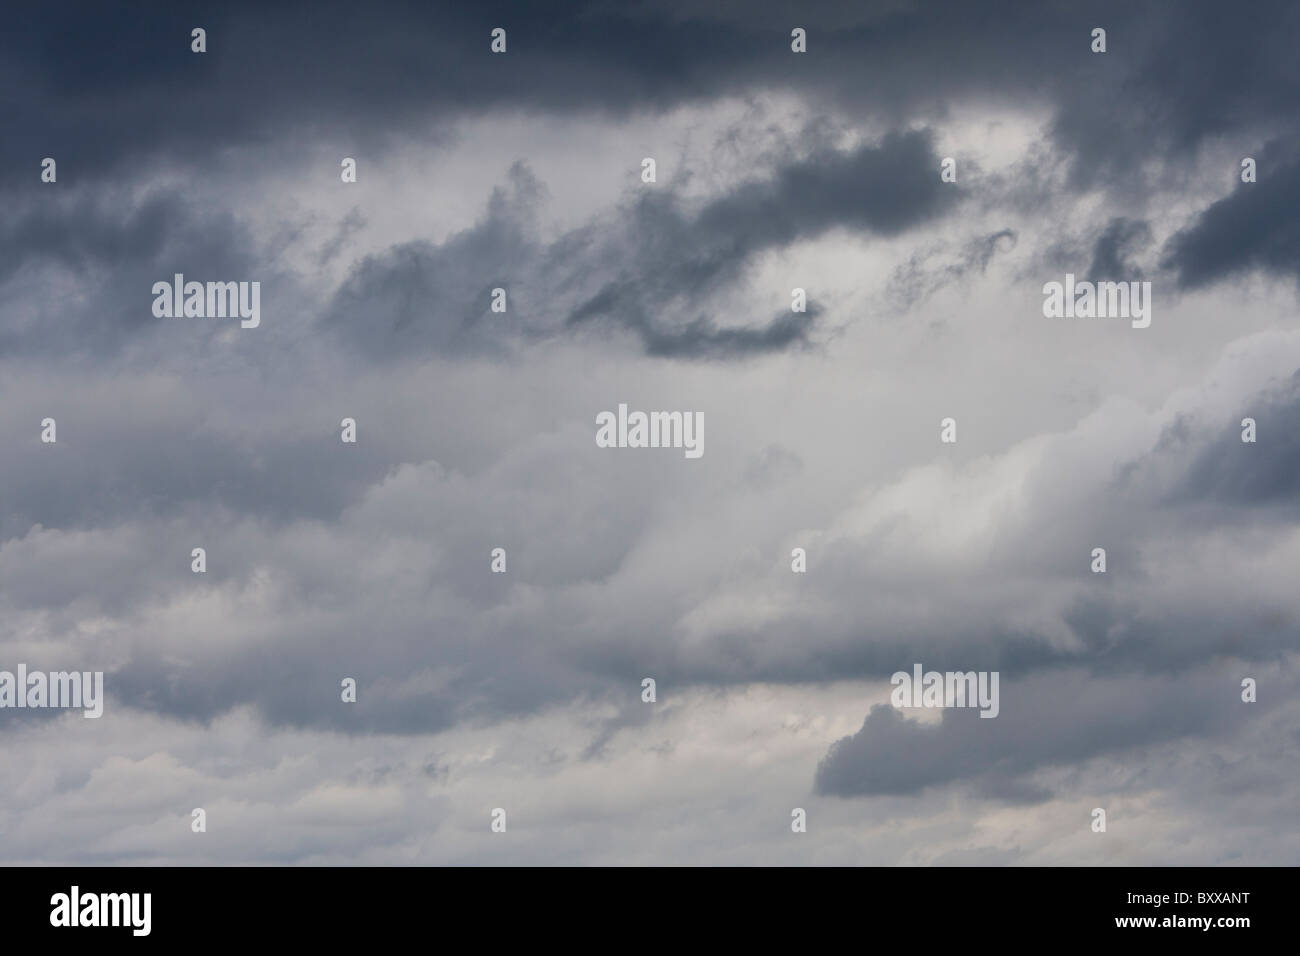 Nimbo-stratus clouds, indicating poor weather and precipitation Stock Photo